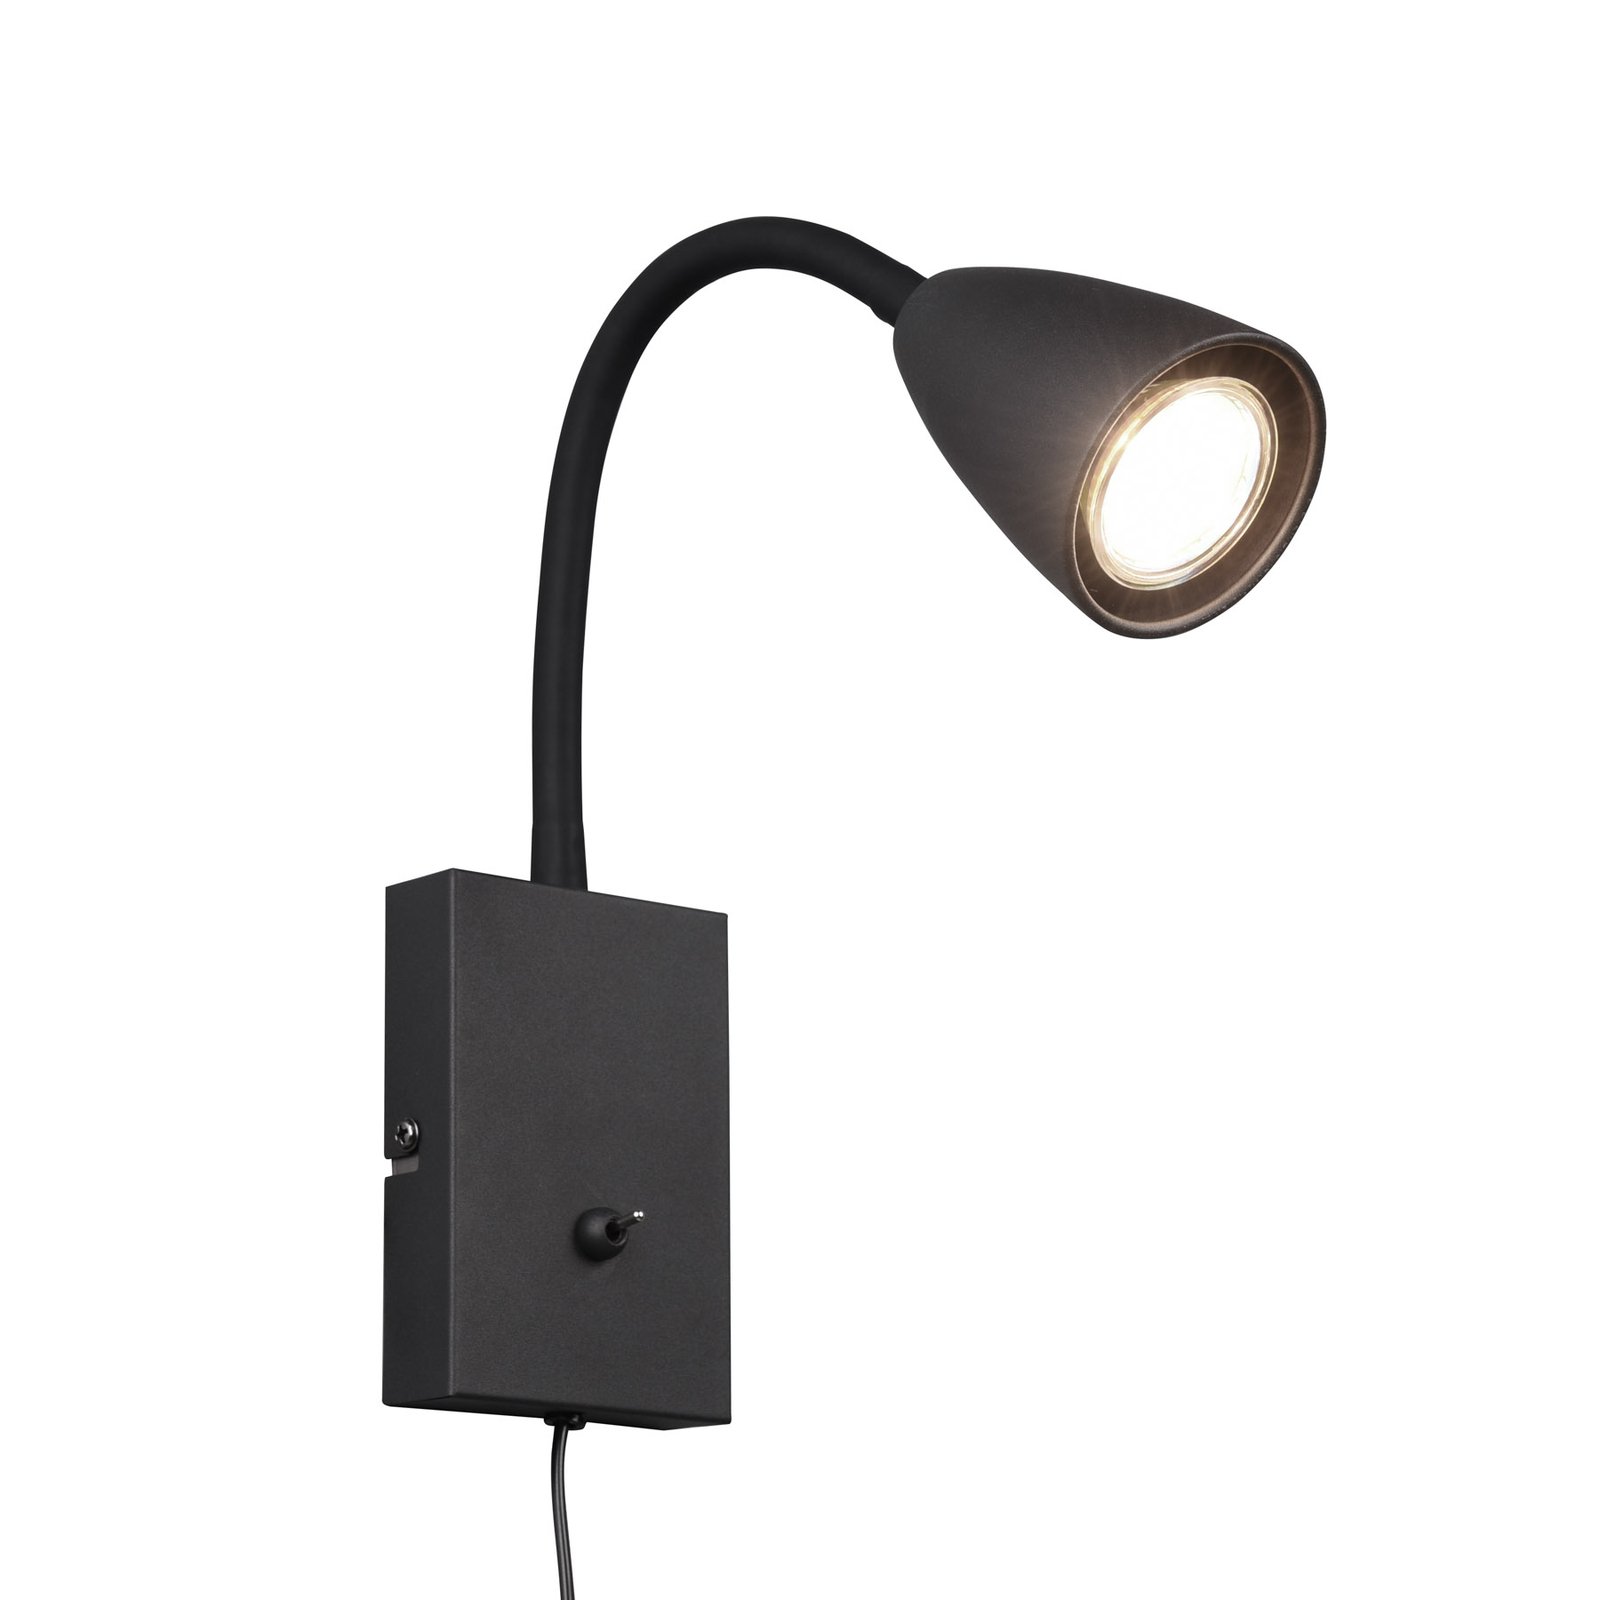 Wanda wall light with plug, matt black